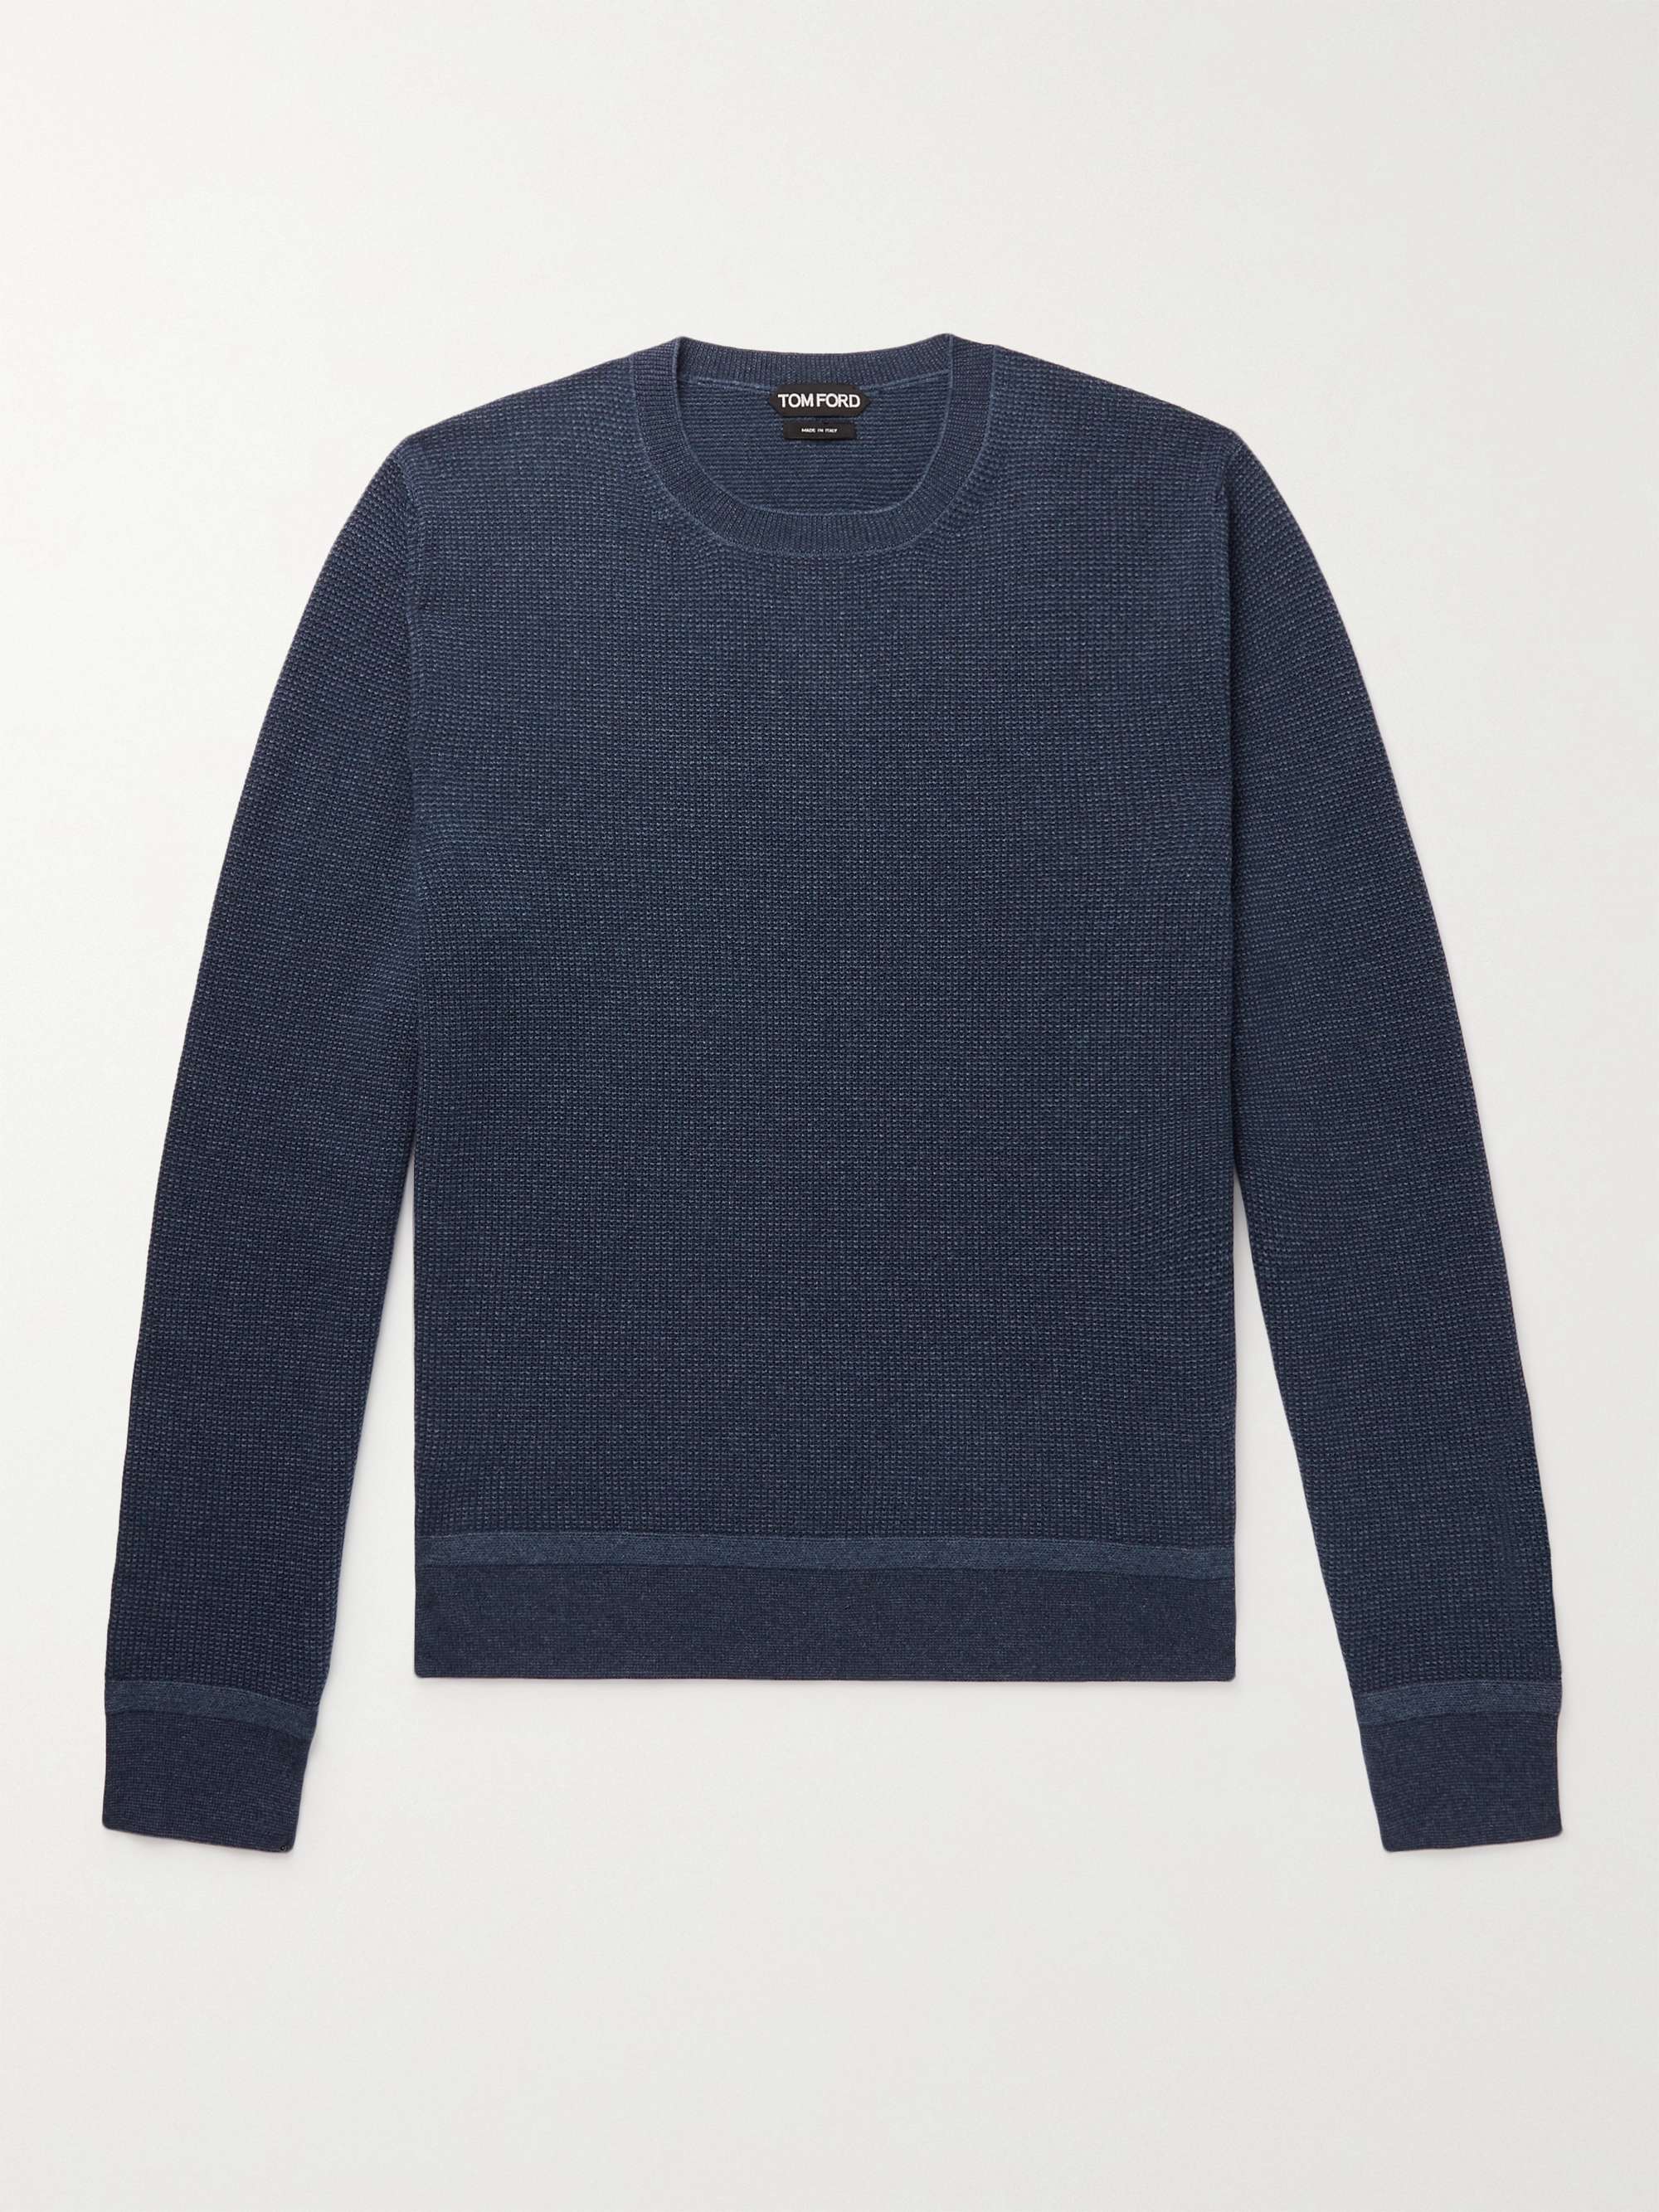 TOM FORD Mélange Cashmere and Wool-Blend Sweater | MR PORTER